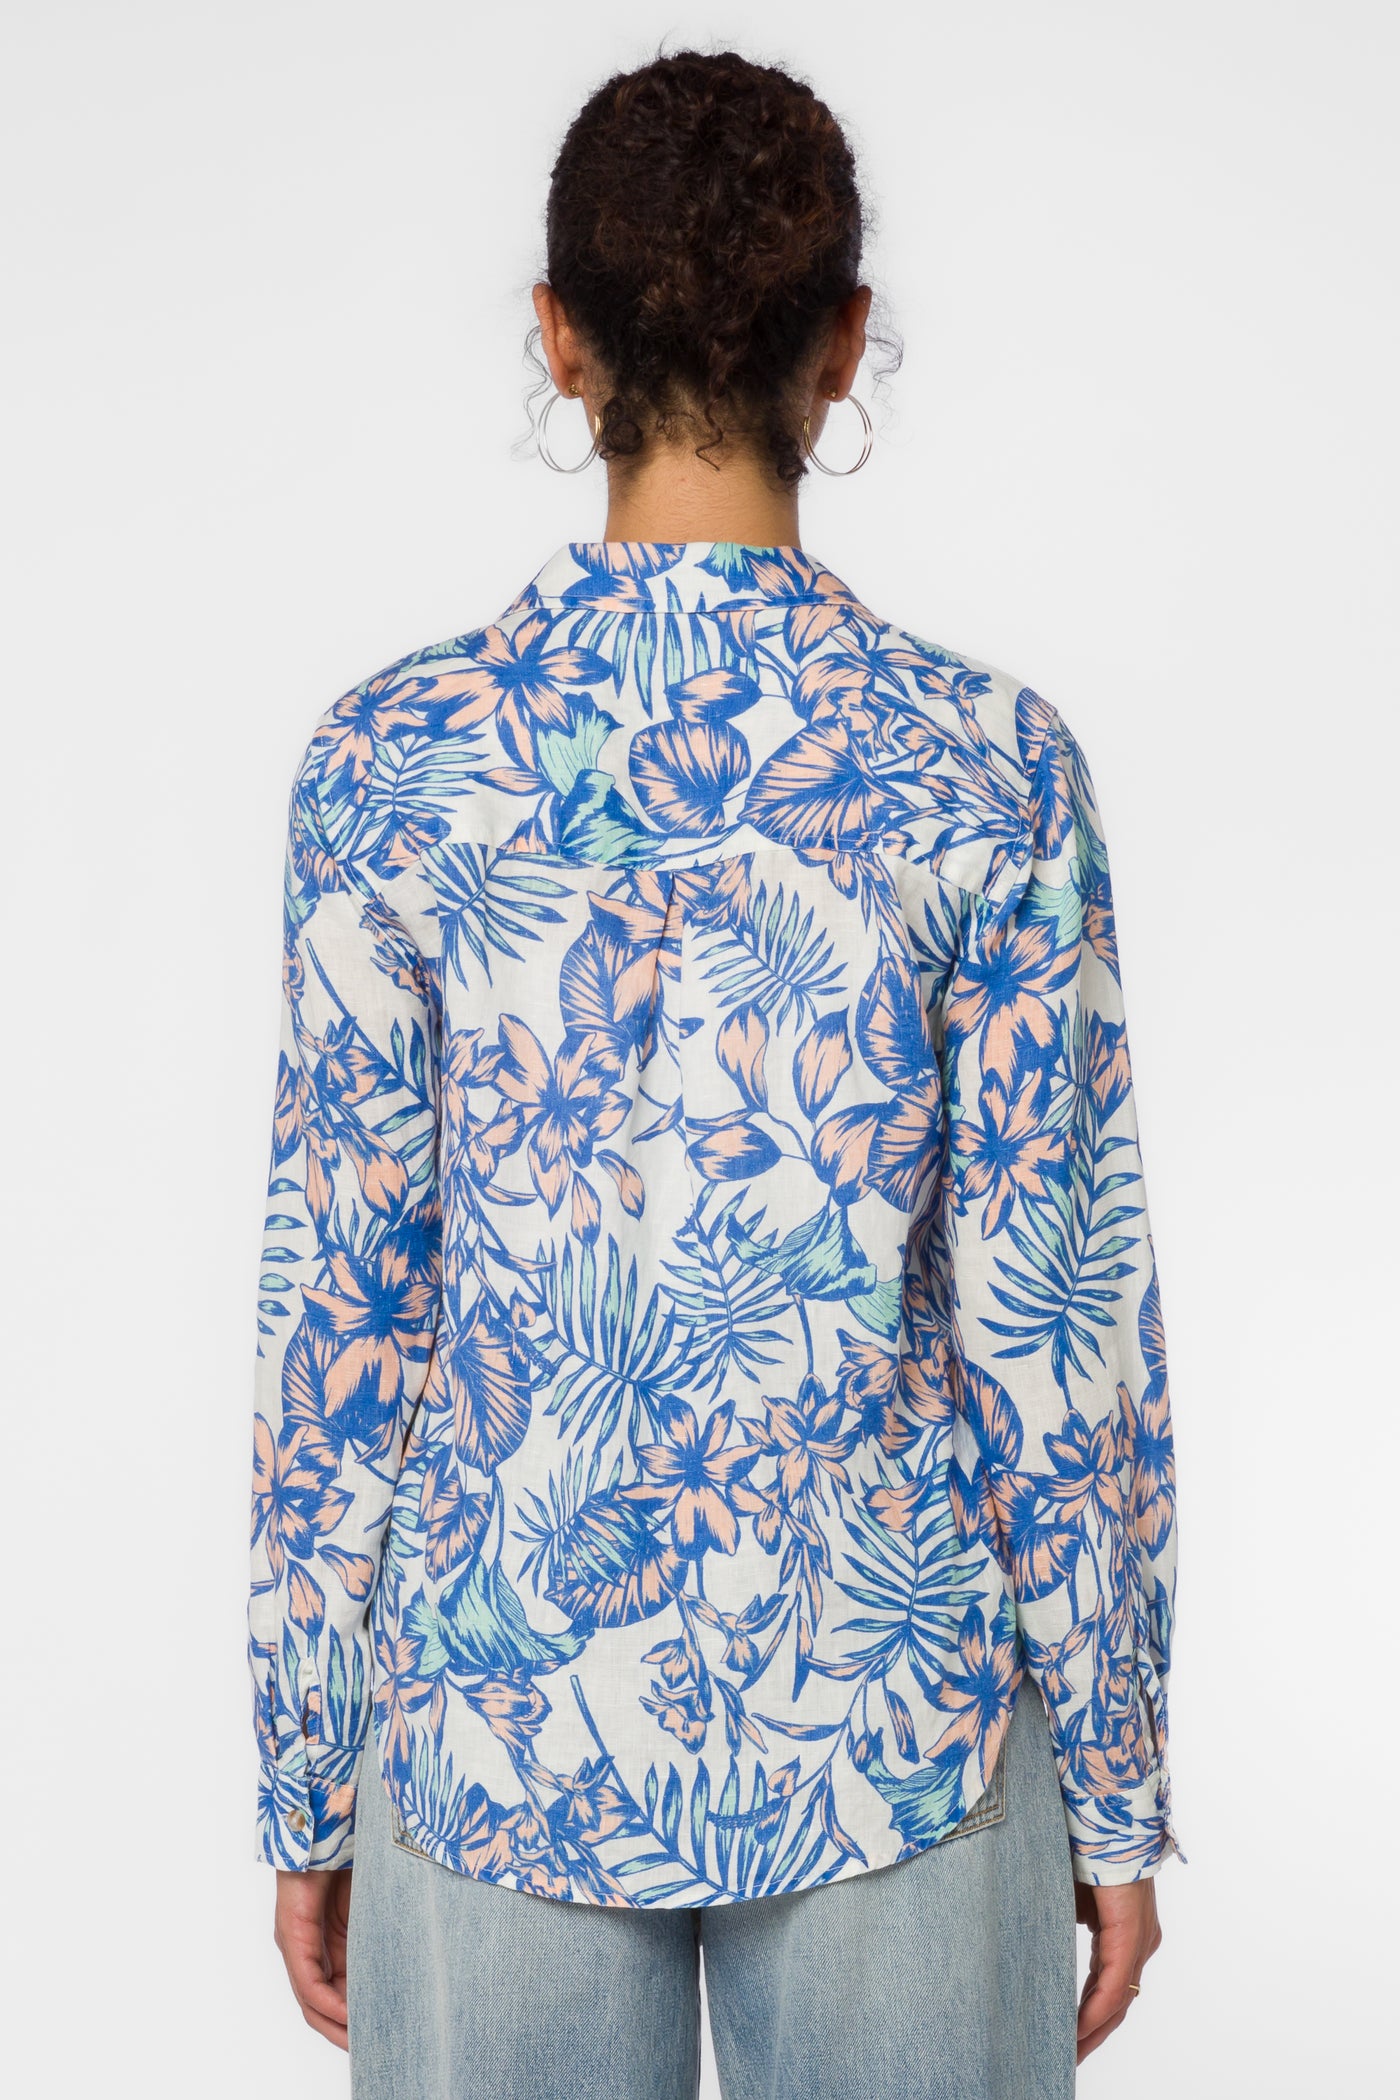 Paloma Blue Tropicana Shirt - Tops - Velvet Heart Clothing